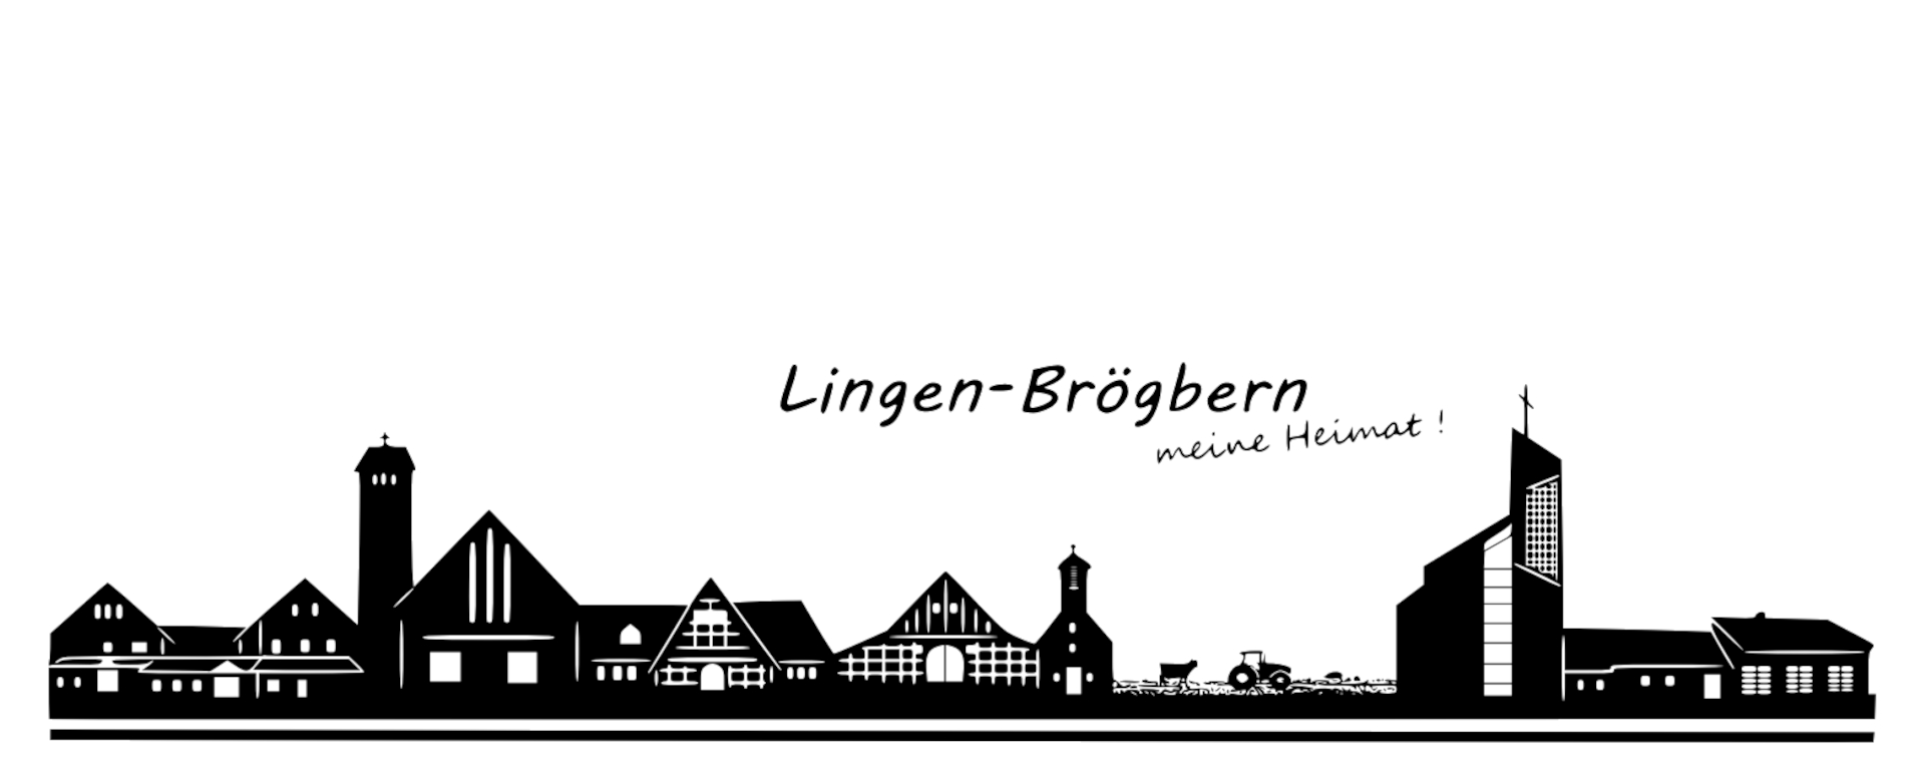 Lingen-Brögbern, meine Heimat!